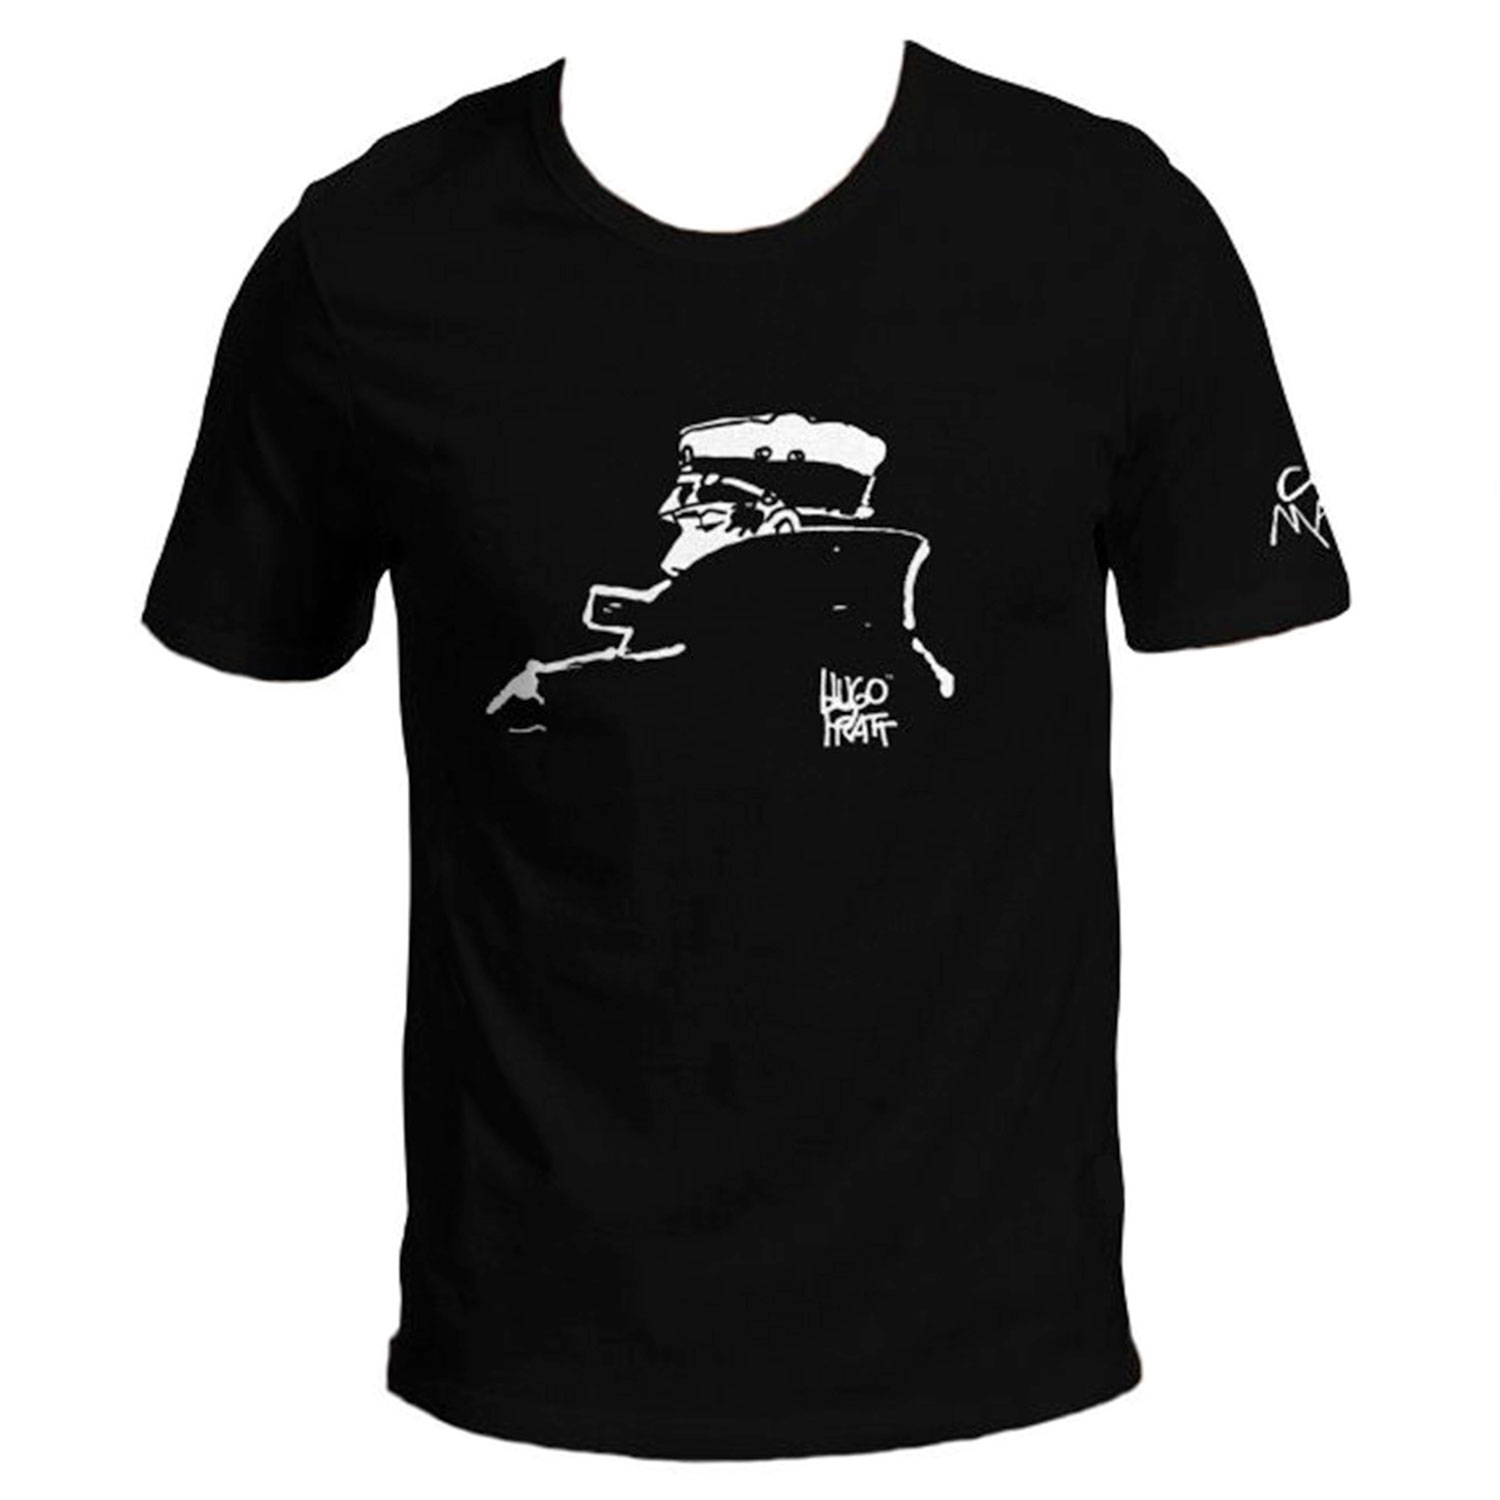 T-shirt Hugo Pratt : Corto Maltese , Nocturne (noir)